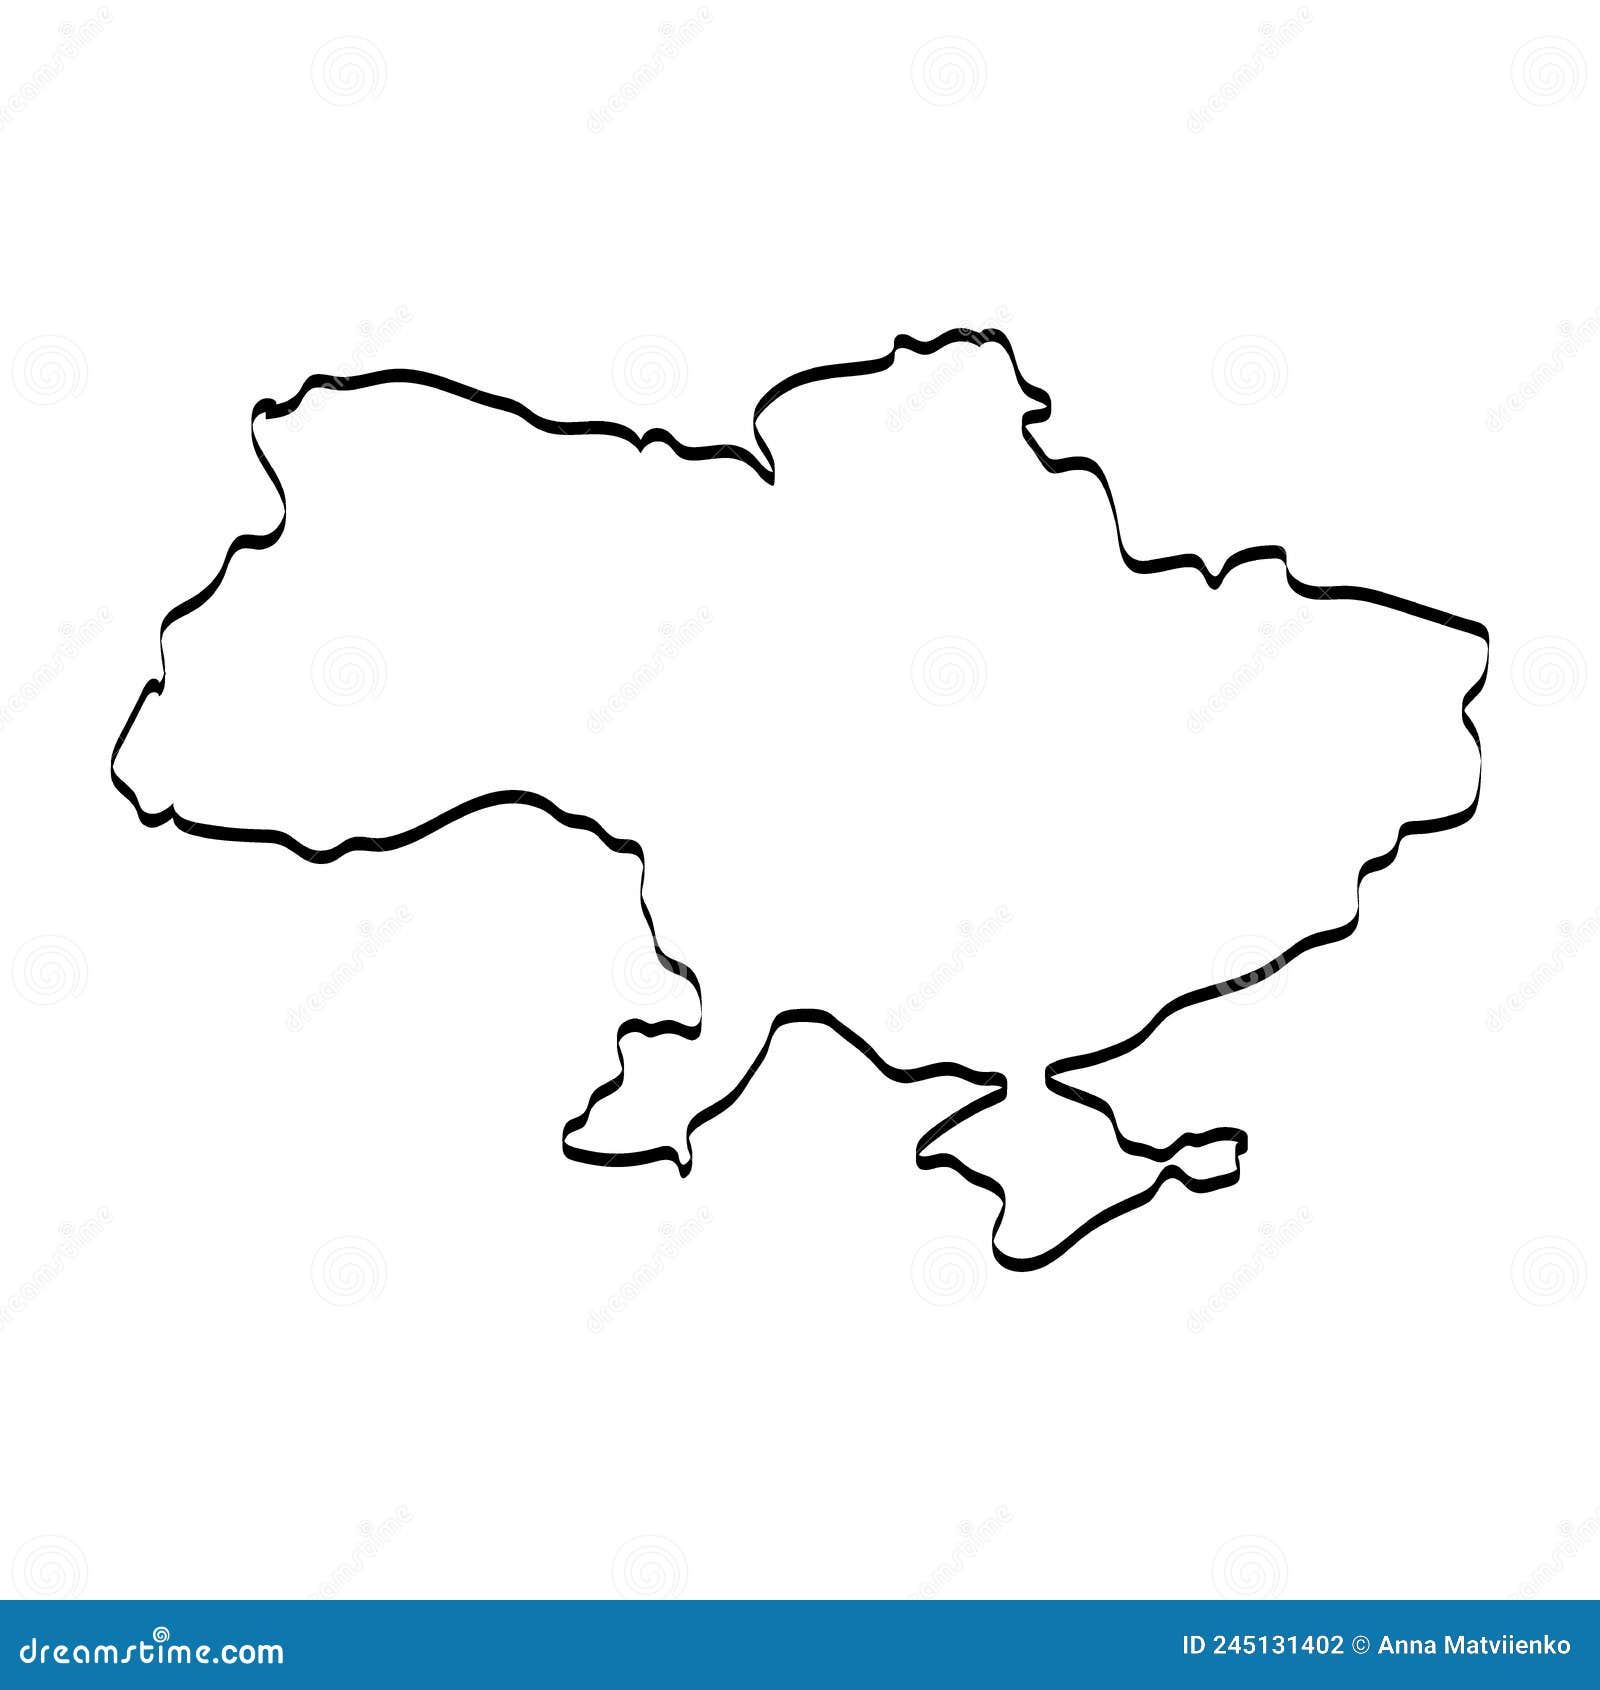 Stop War in Ukraine concept vector illustration. Heart, love for Ukraine, Ukrainian flag and map illustration. Save. Stop War in Ukraine concept vector illustration. Ukrainian map illustration. Save Ukraine from Russia.